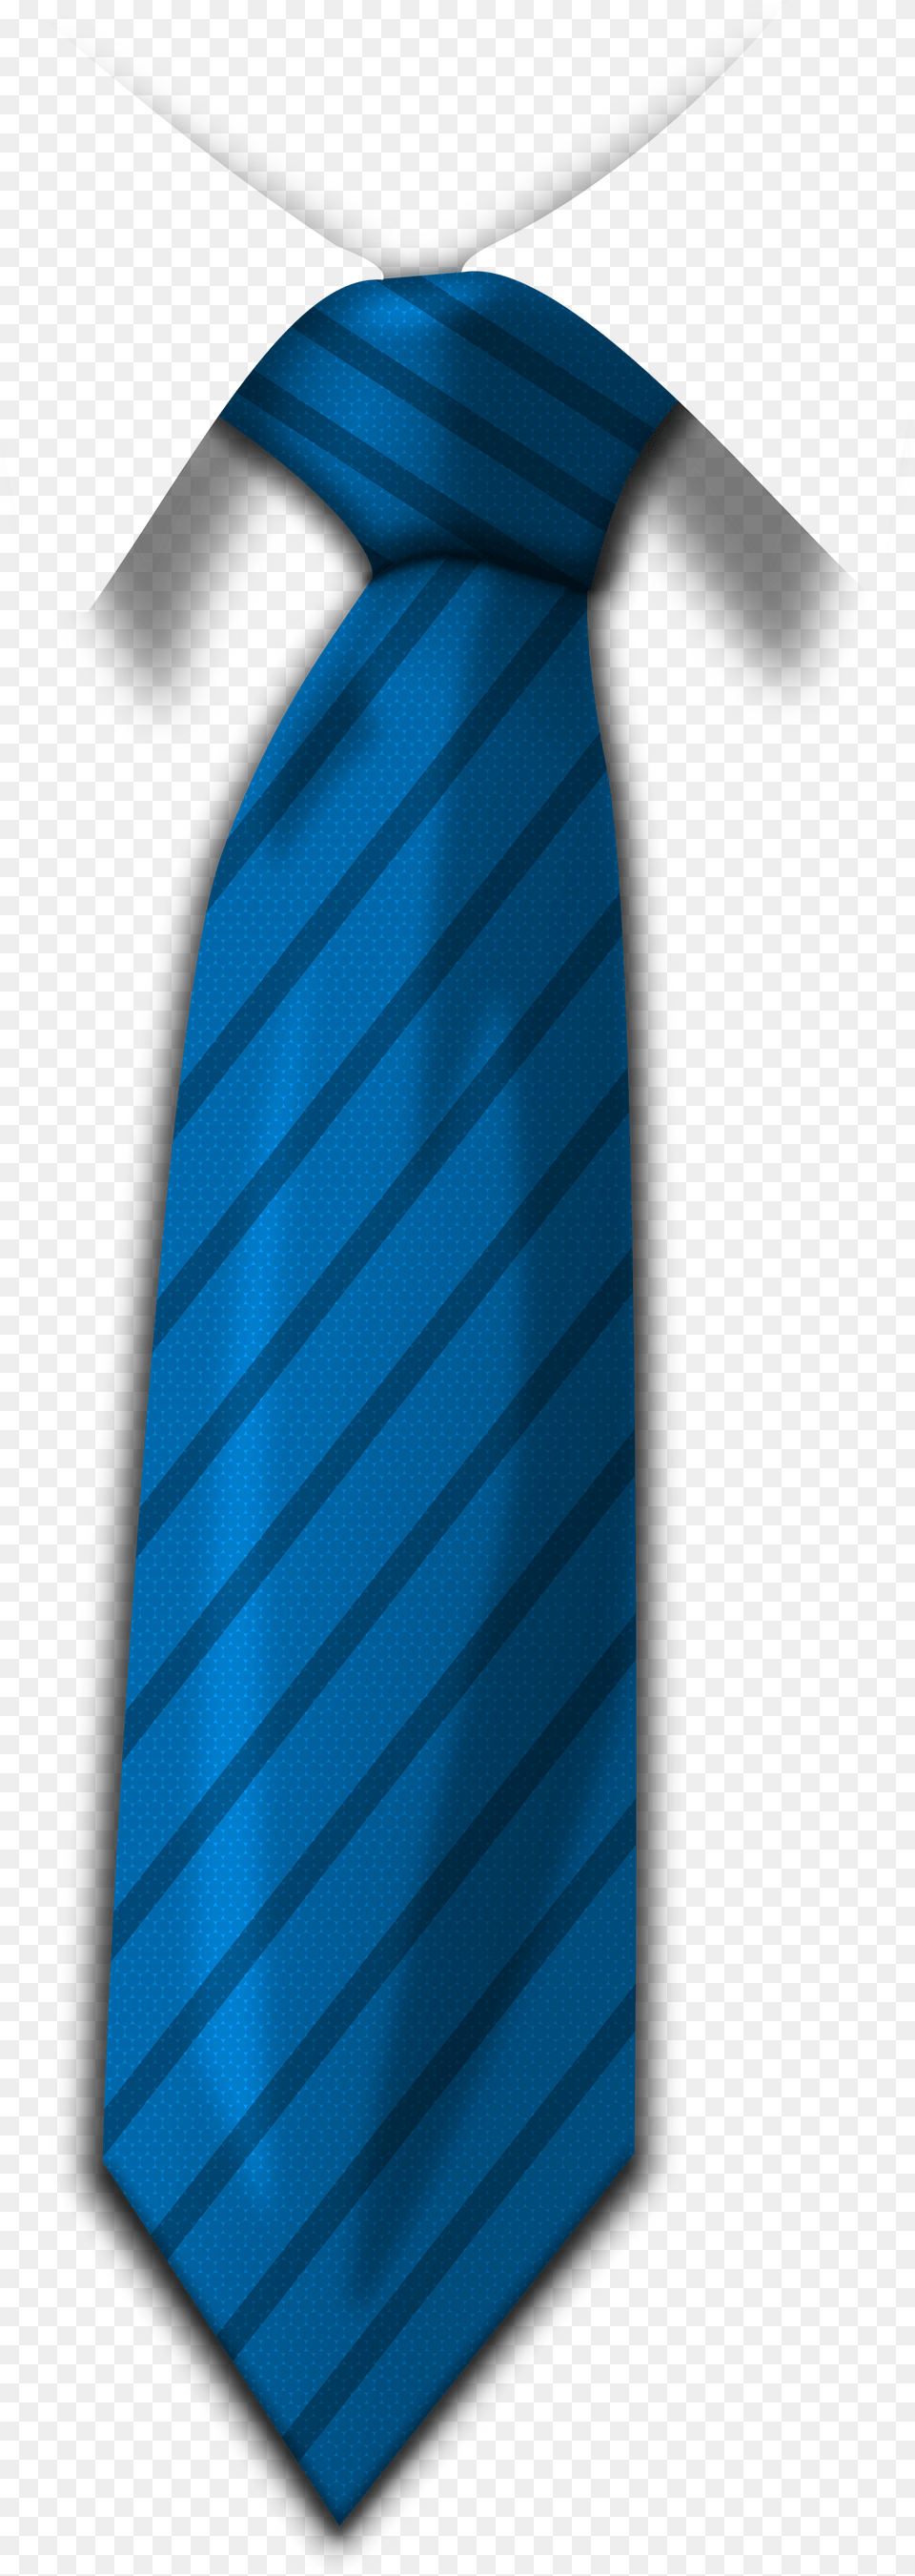 Blue Tie Tie Hd, Accessories, Formal Wear, Necktie, Smoke Pipe Png Image